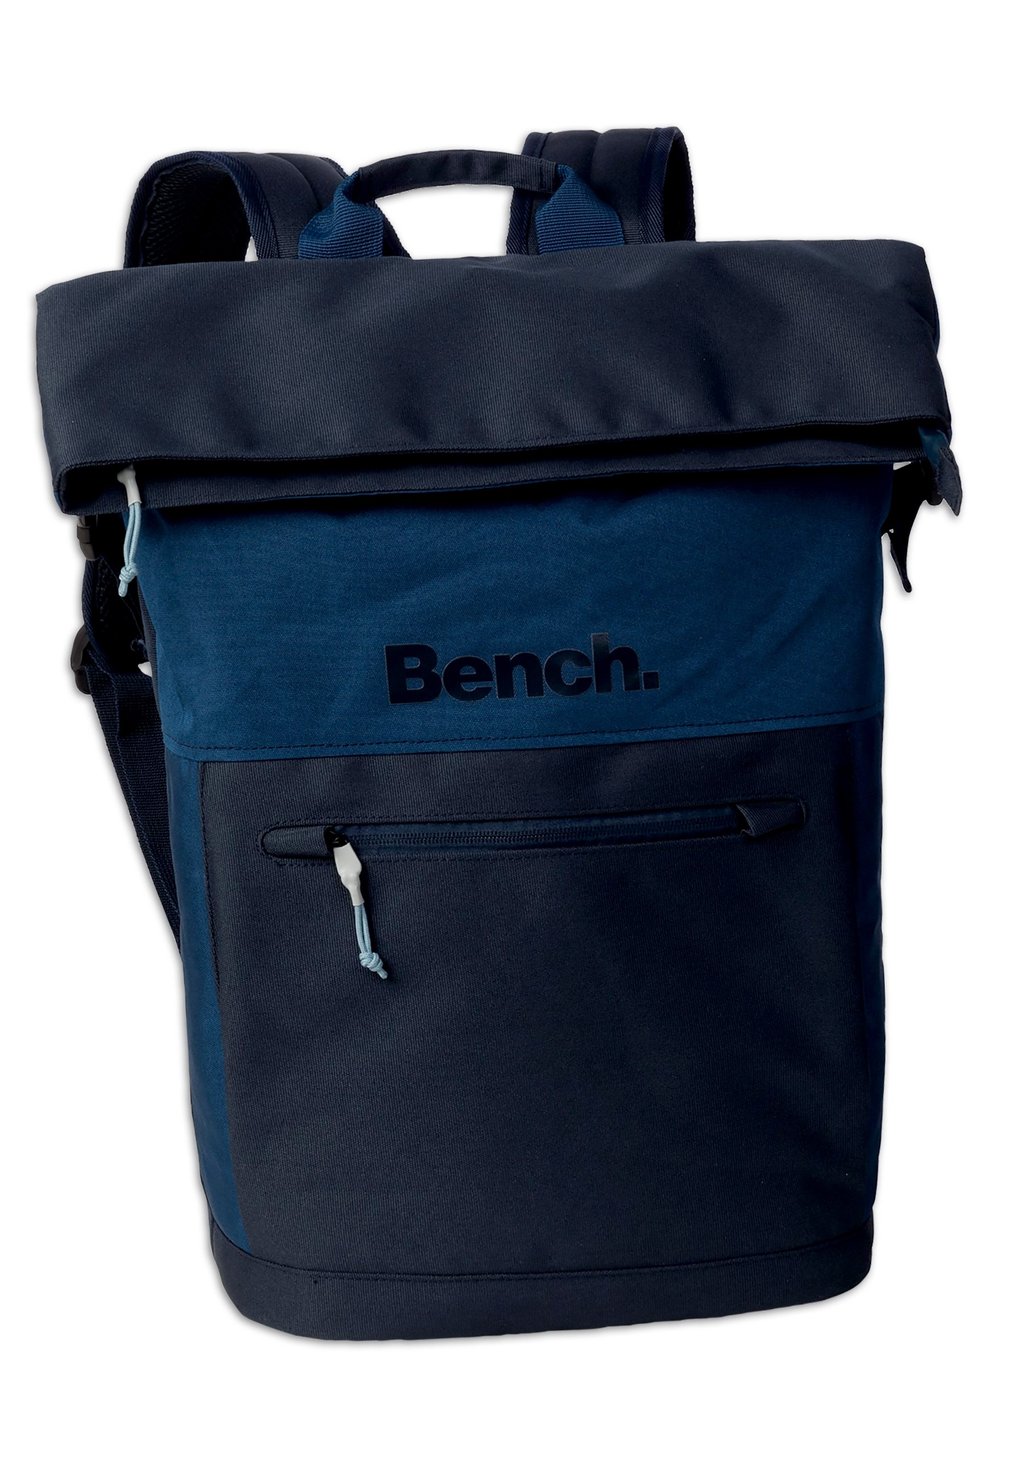 Рюкзак BUSINESS FREIZEIT Bench, цвет blau marine цена и фото